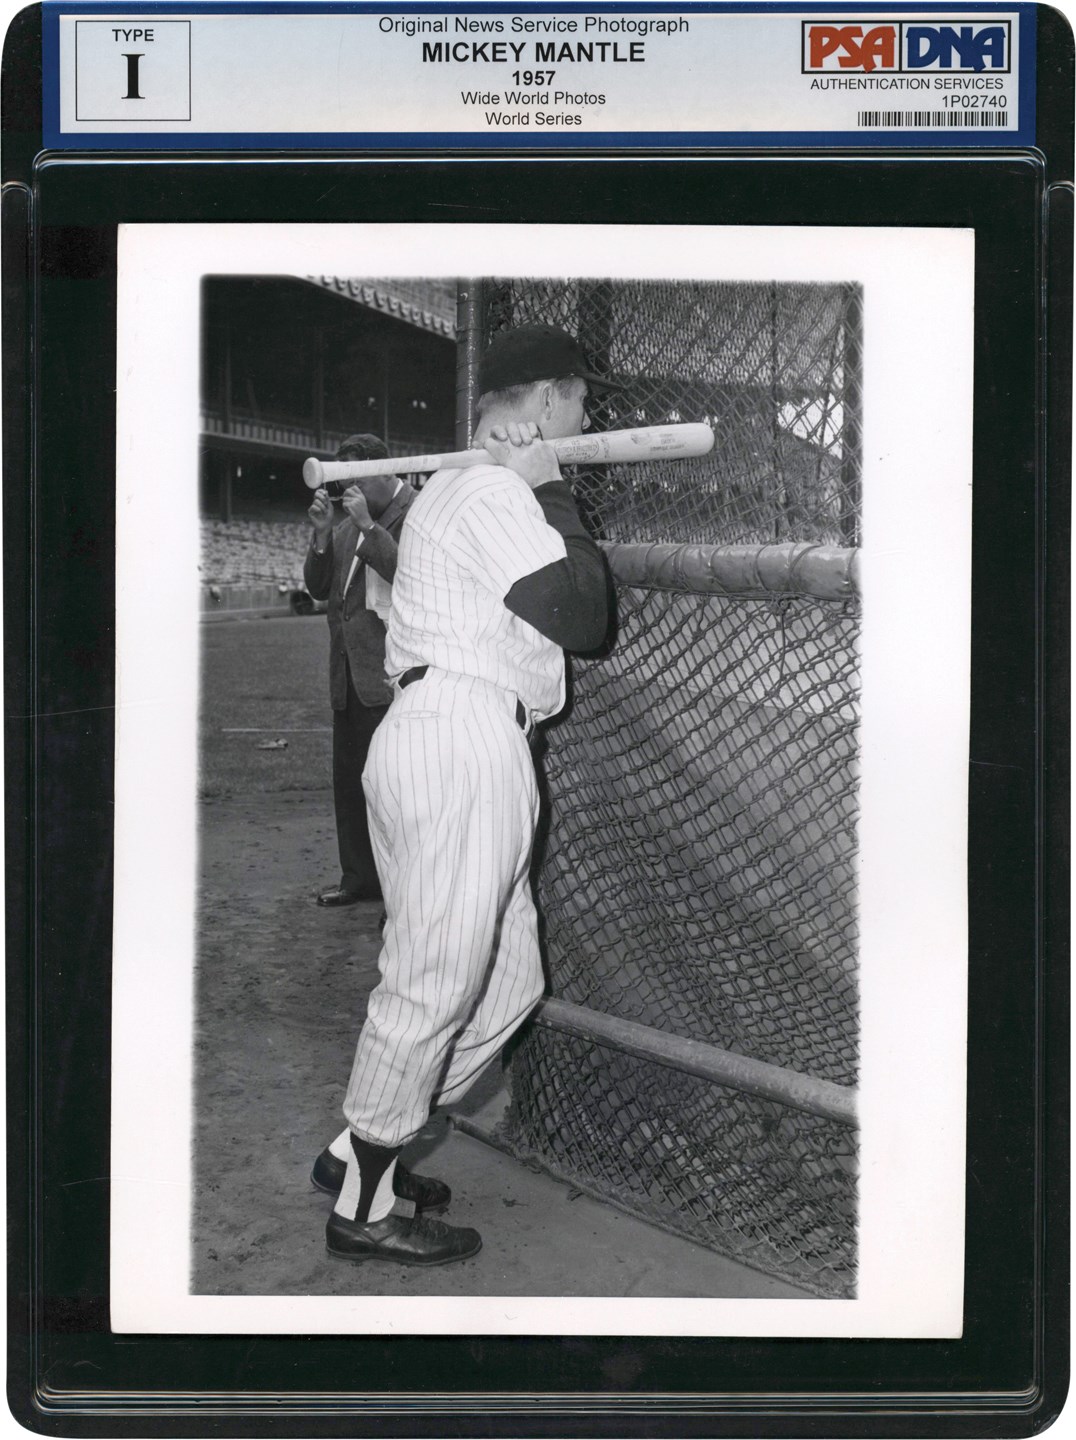 Vintage Sports Photographs - Mickey Mantle 1957 World Series Photograph (PSA Type I)